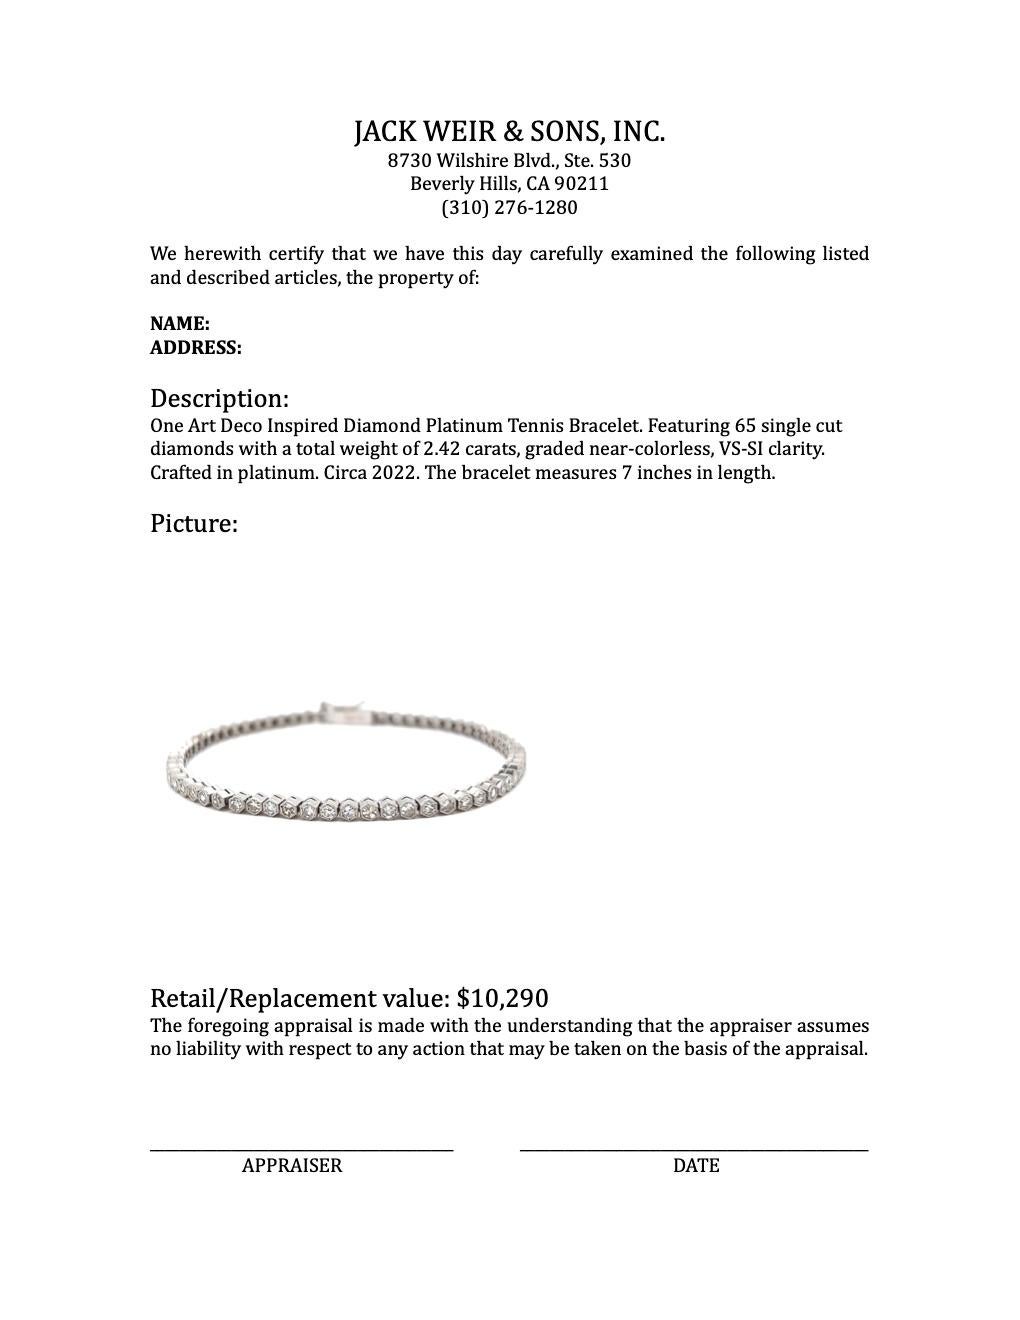 Art Deco Inspired Diamond Platinum Tennis Bracelet For Sale 2